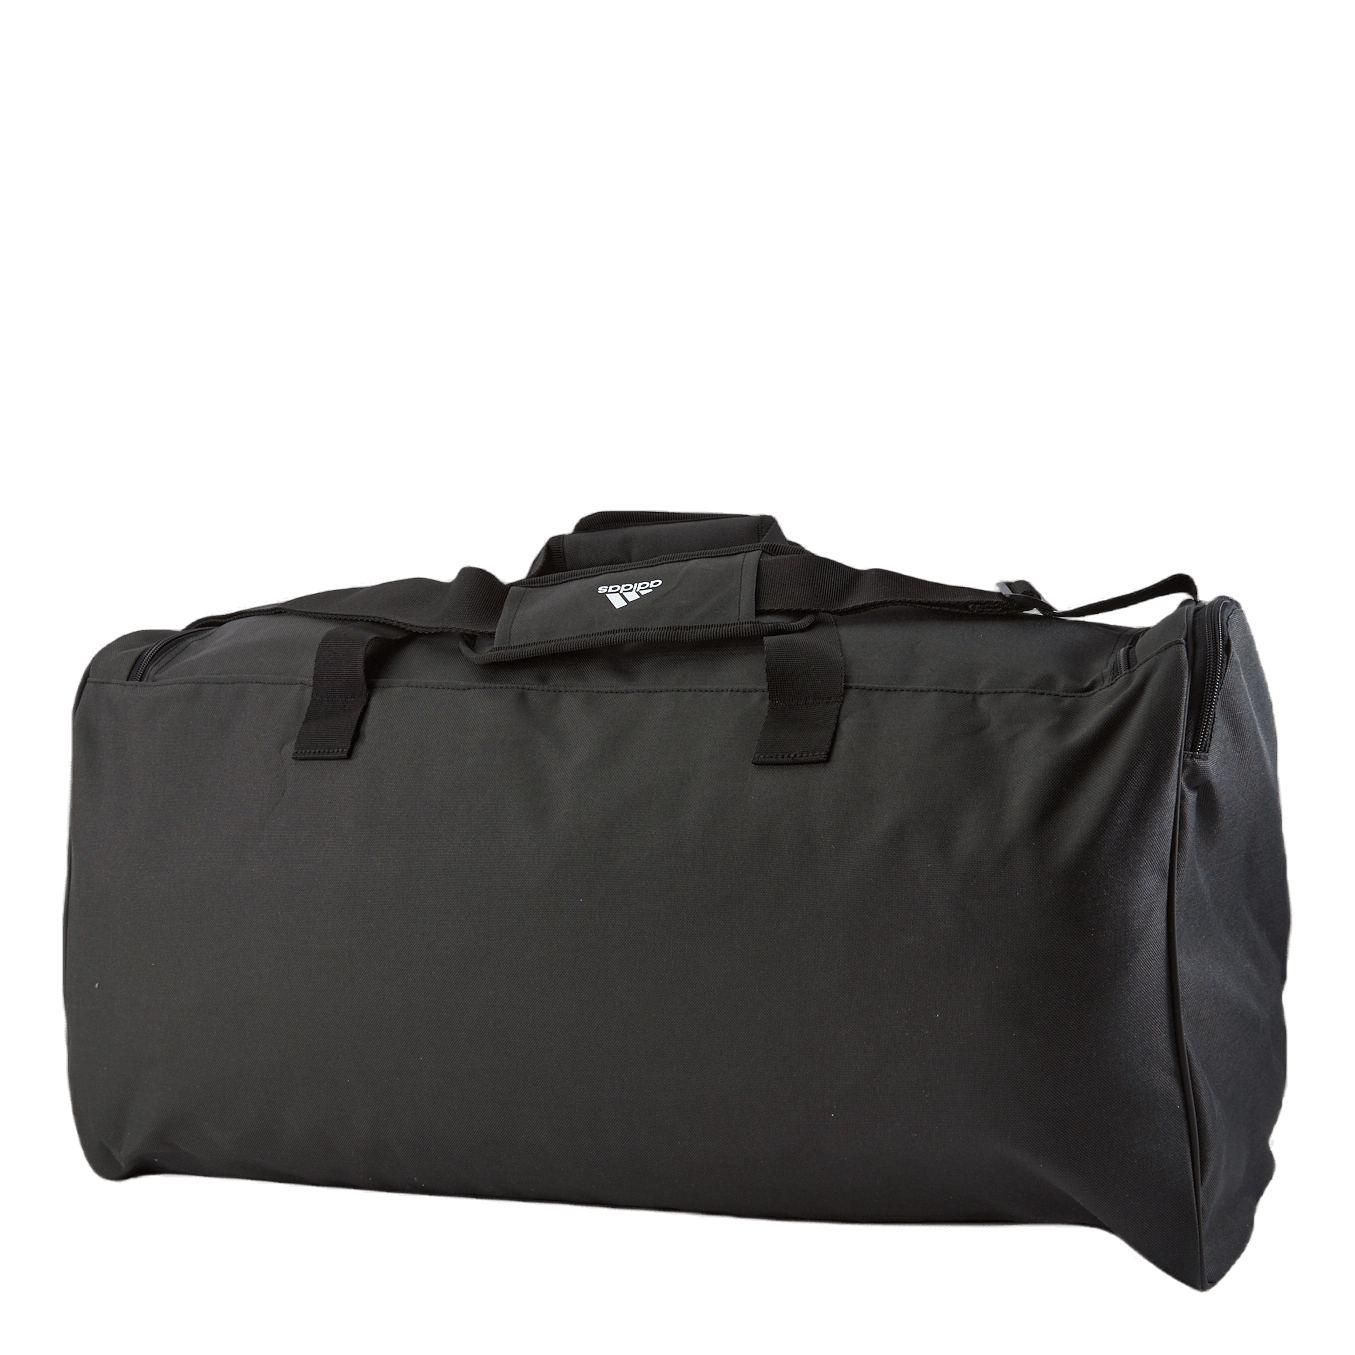 Essentials Duffel Bag Large Black / White